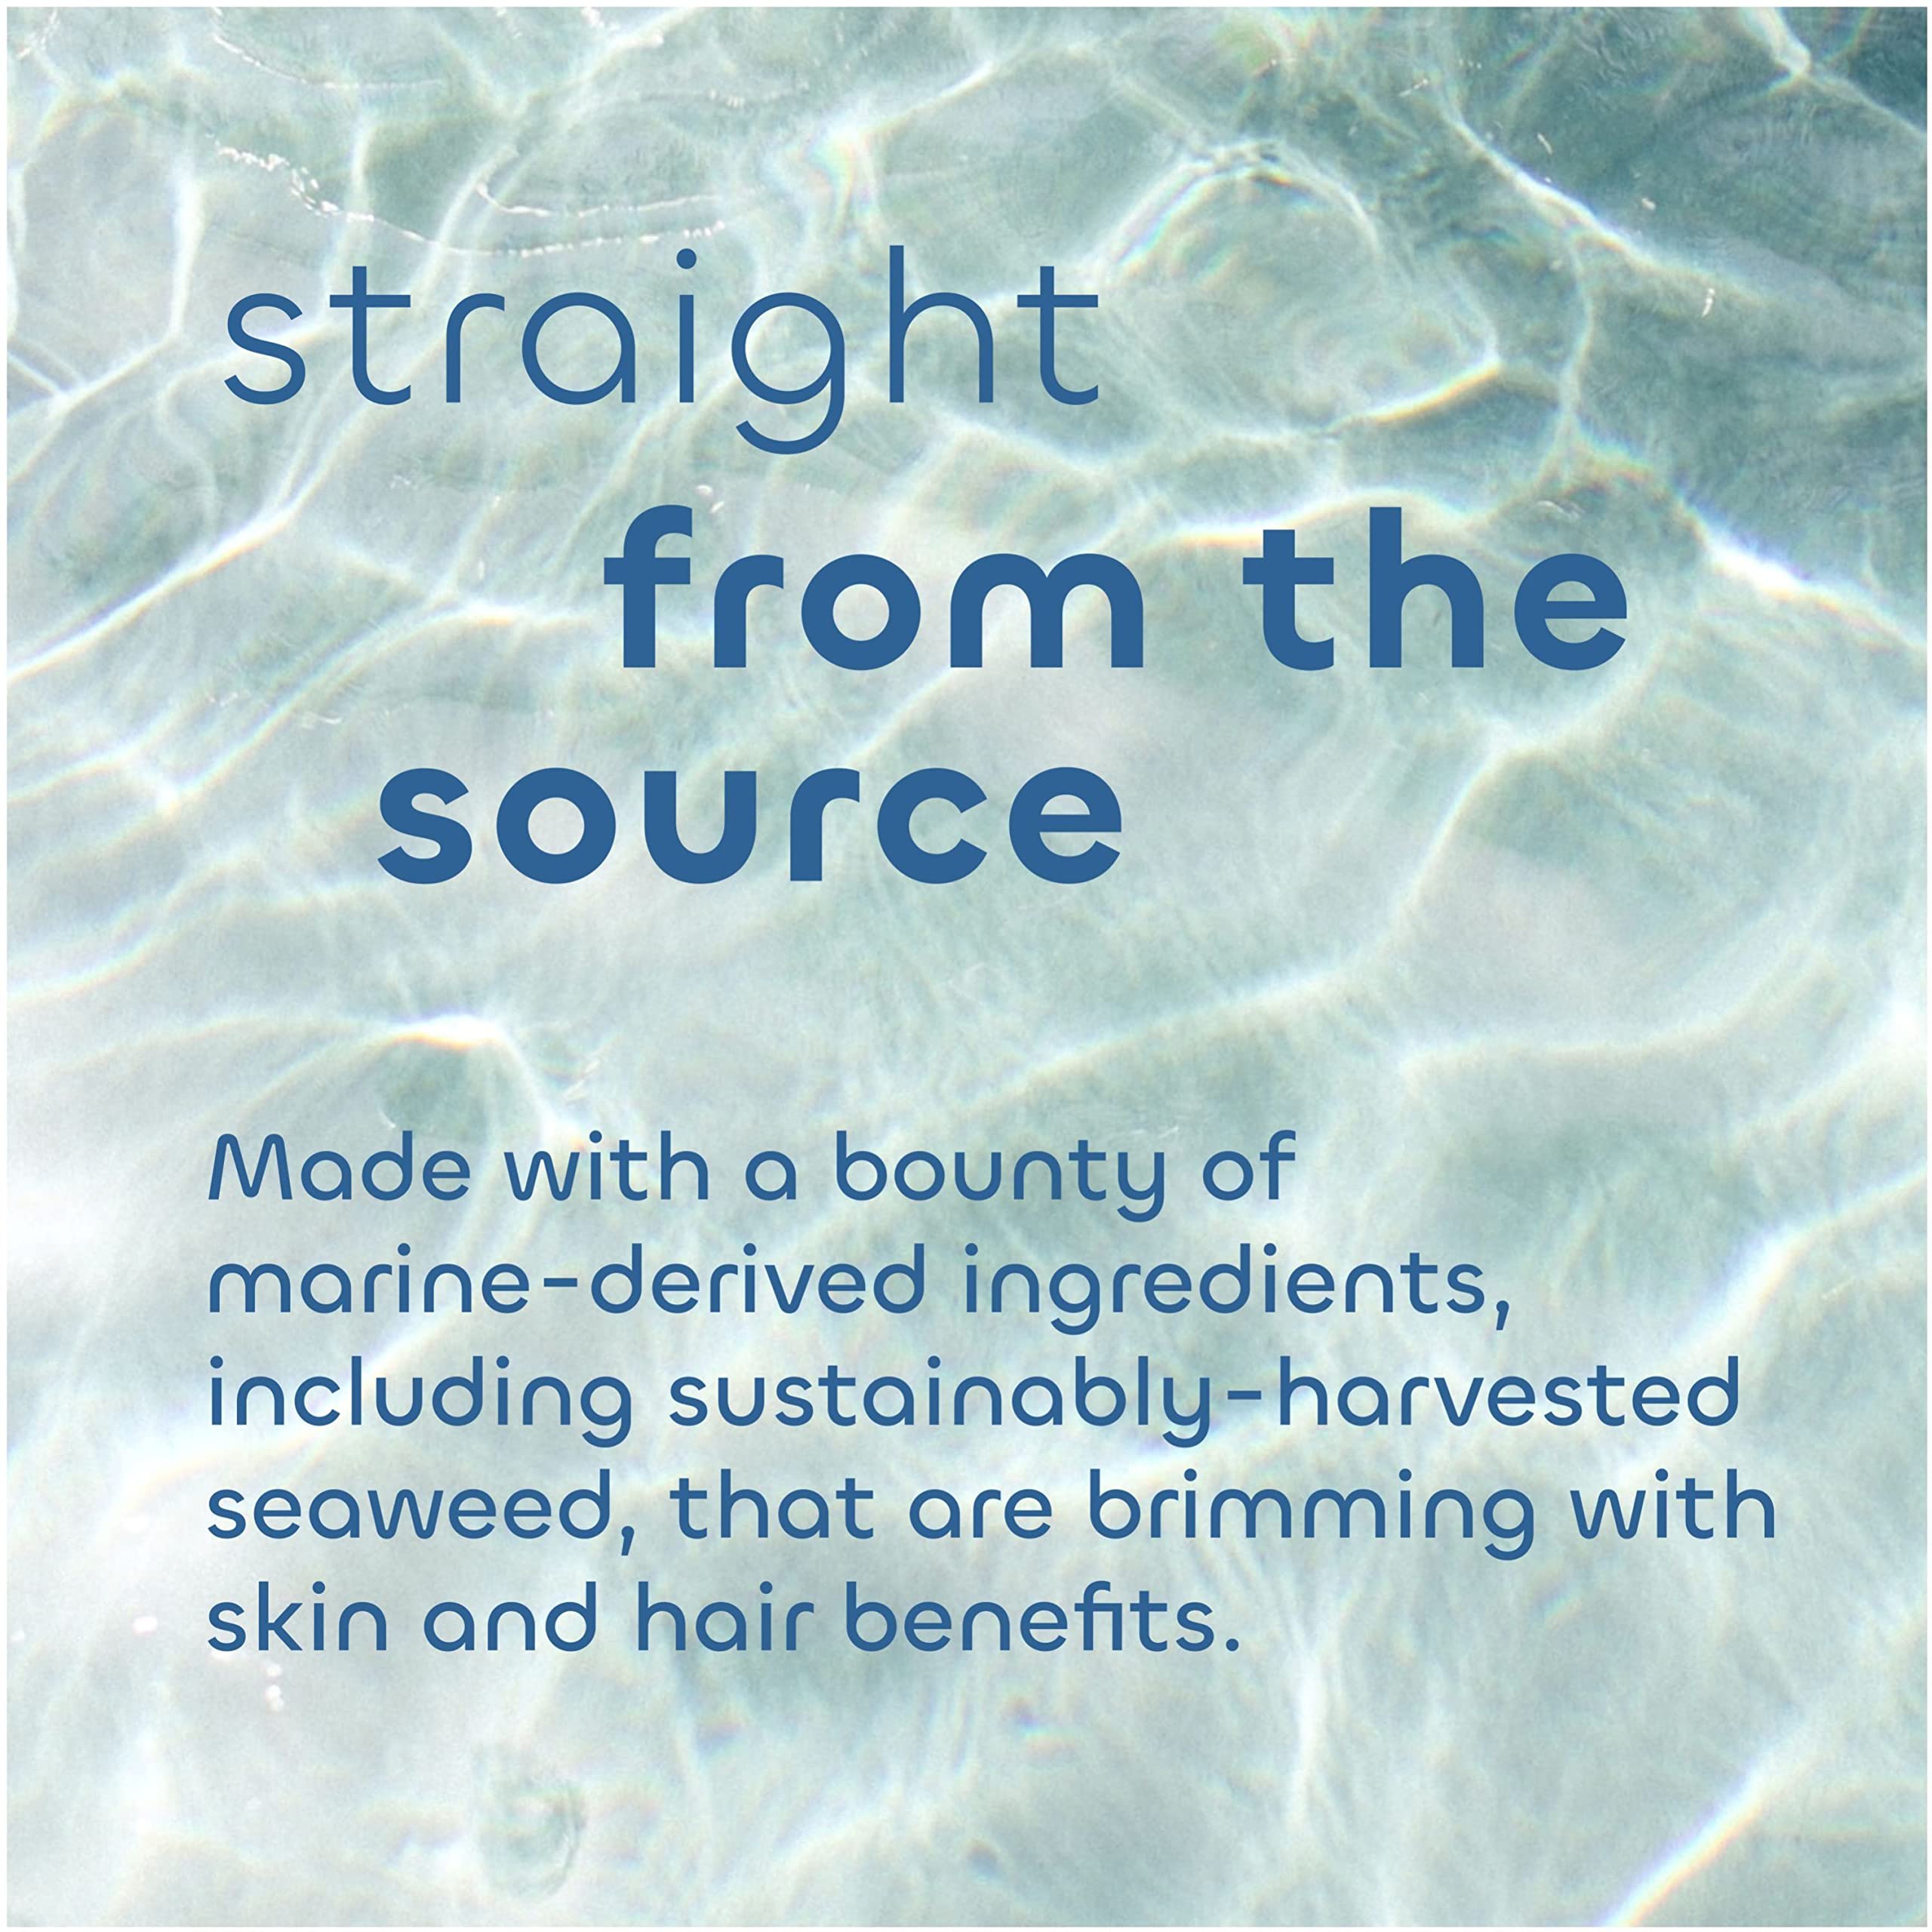 Seaweed Bath Co. Detox Body Wash, Orange Cedar Scent, 12 Ounce, Sustainably Harvested Seaweed, Spirulina, French Sea Clay